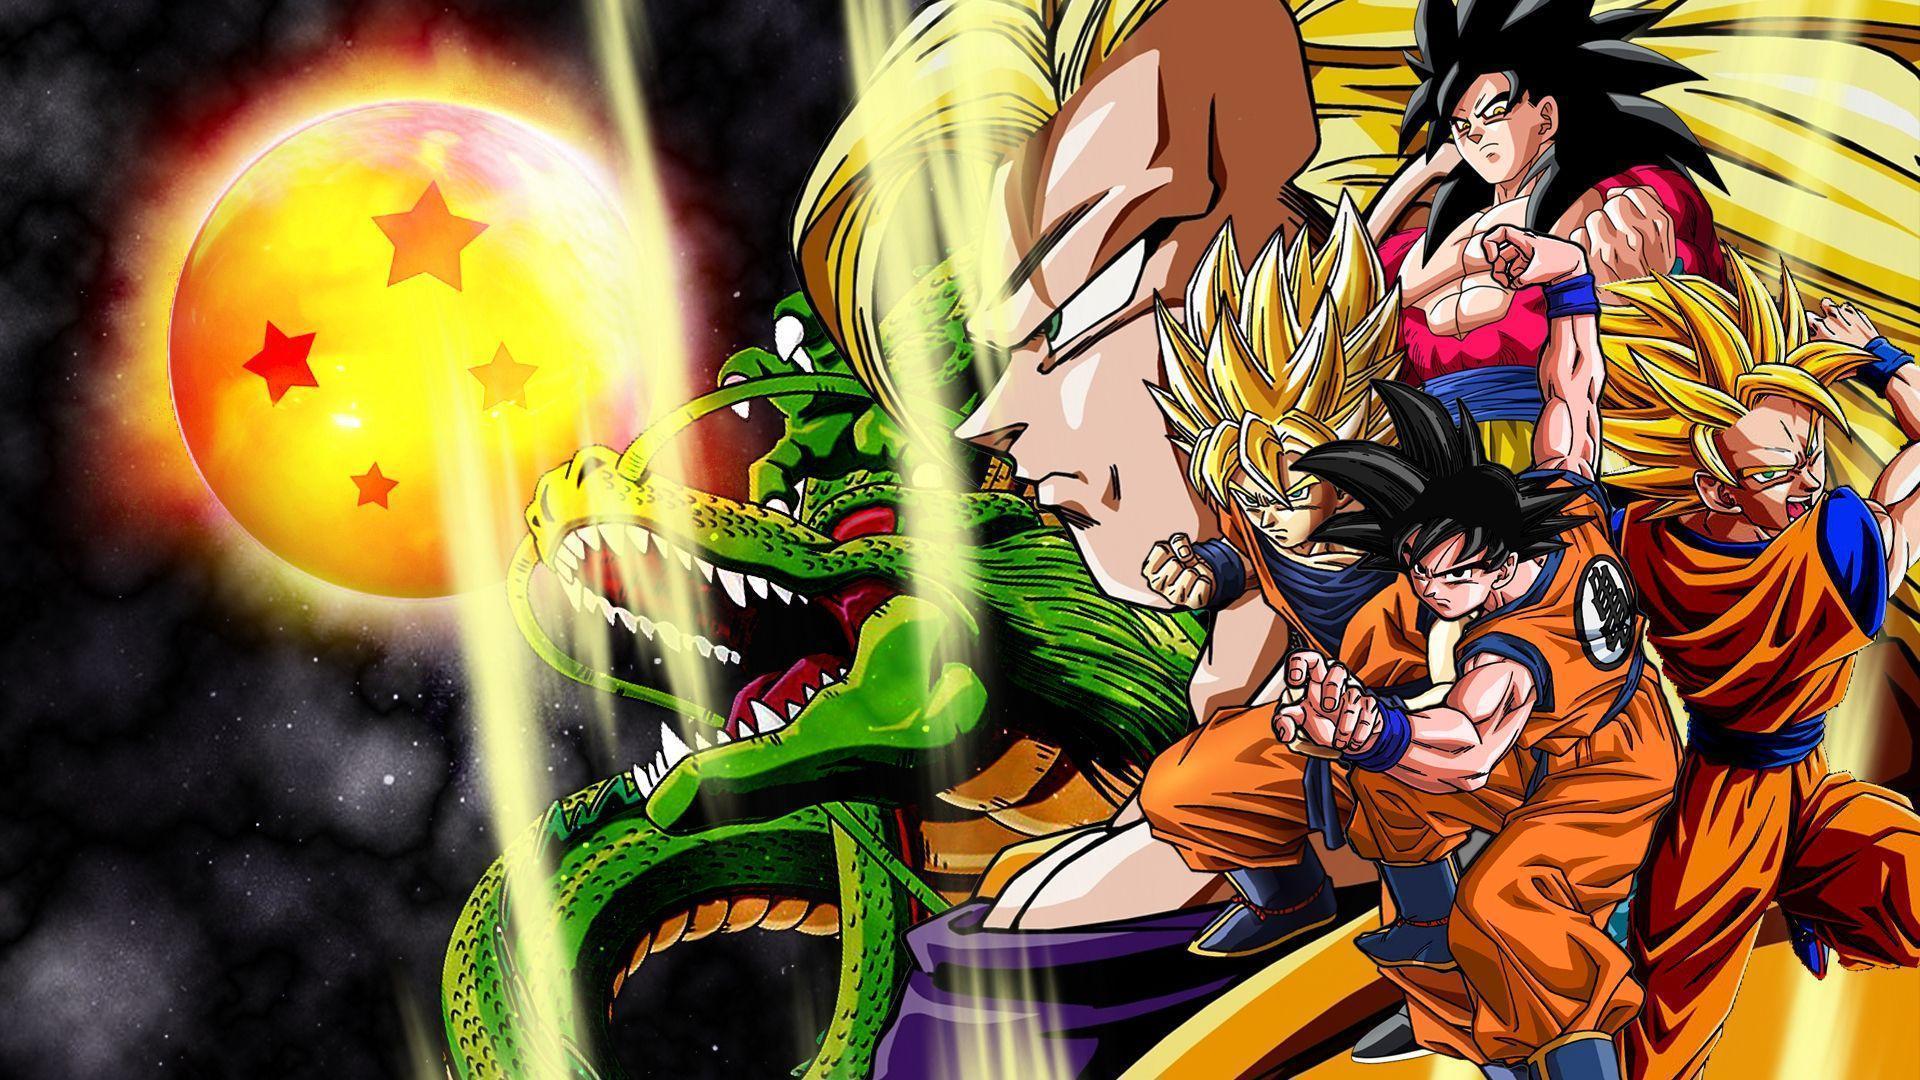 Cartoon Wallpaper: Goku Super Saiyan God Wallpaper Image